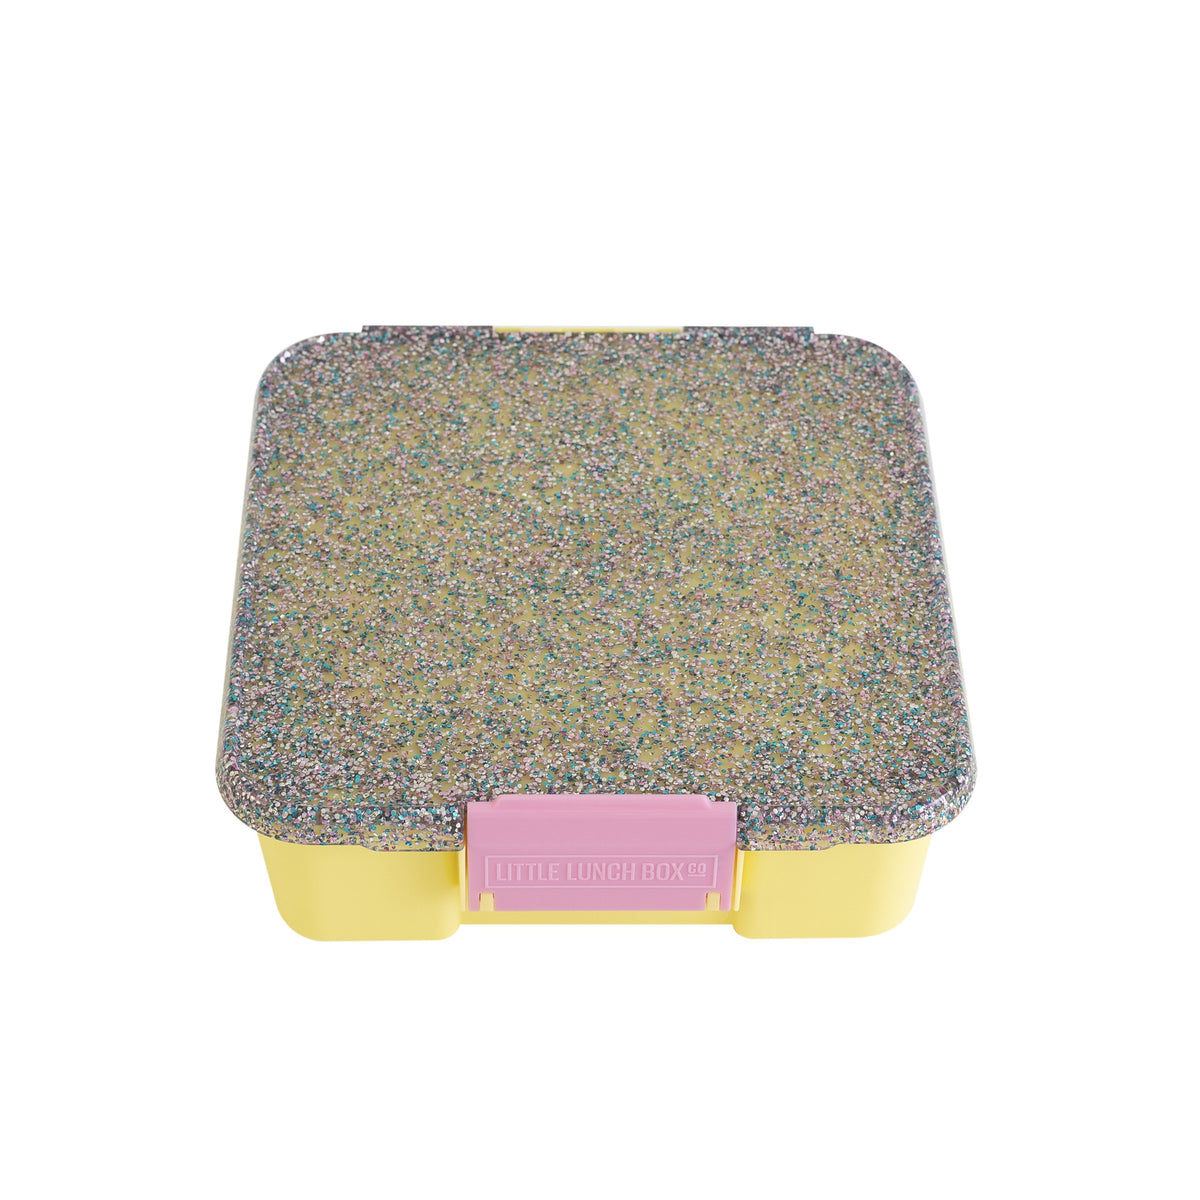 Little Lunch Box Co - Bento Three - Yellow Glitter